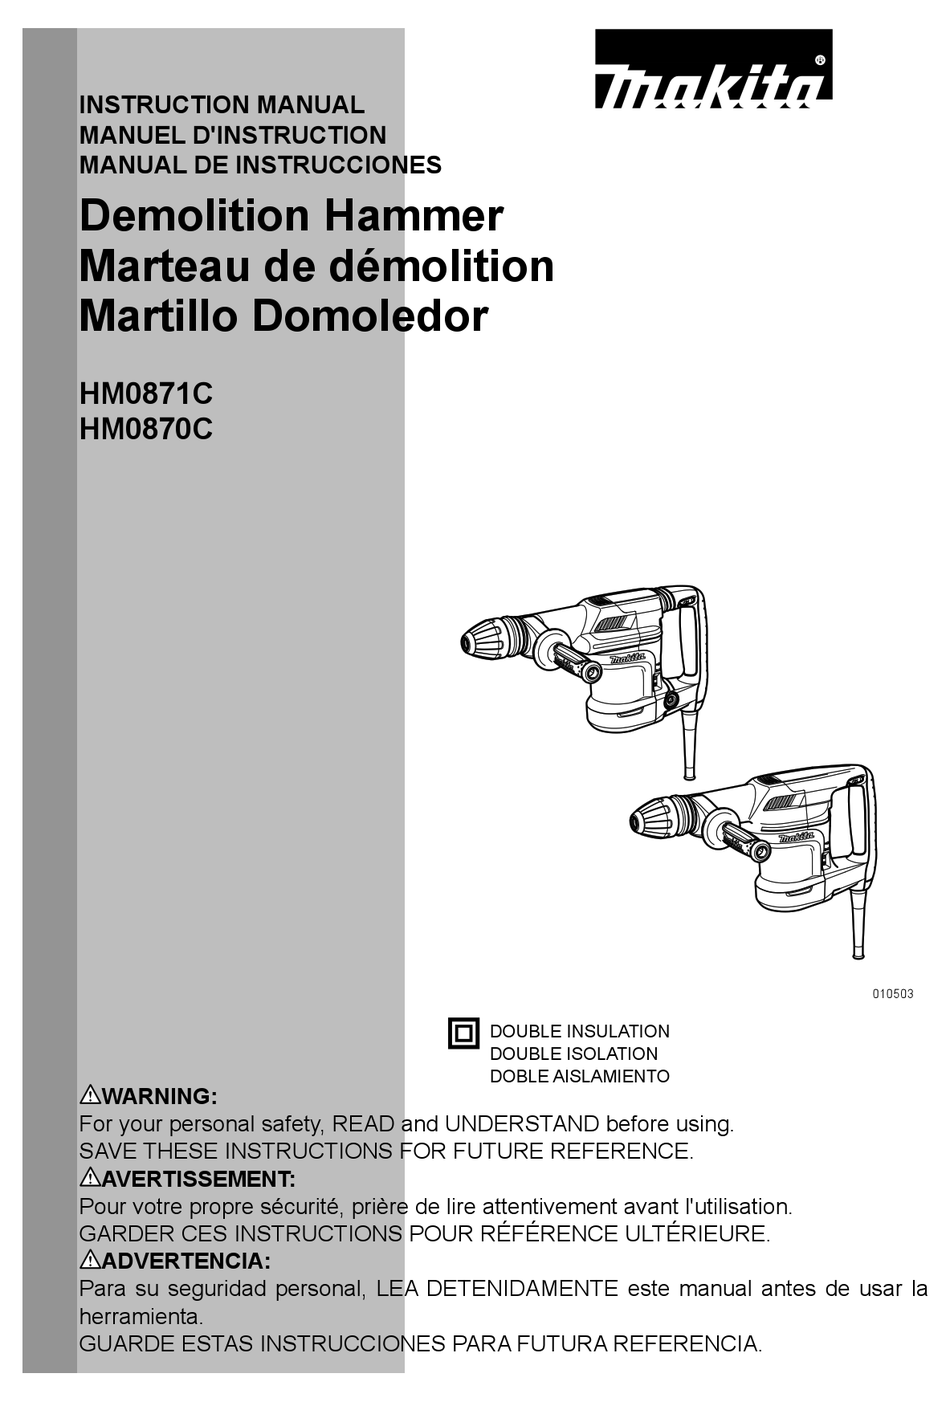 MAKITA HM0871C INSTRUCTION MANUAL Pdf Download | ManualsLib